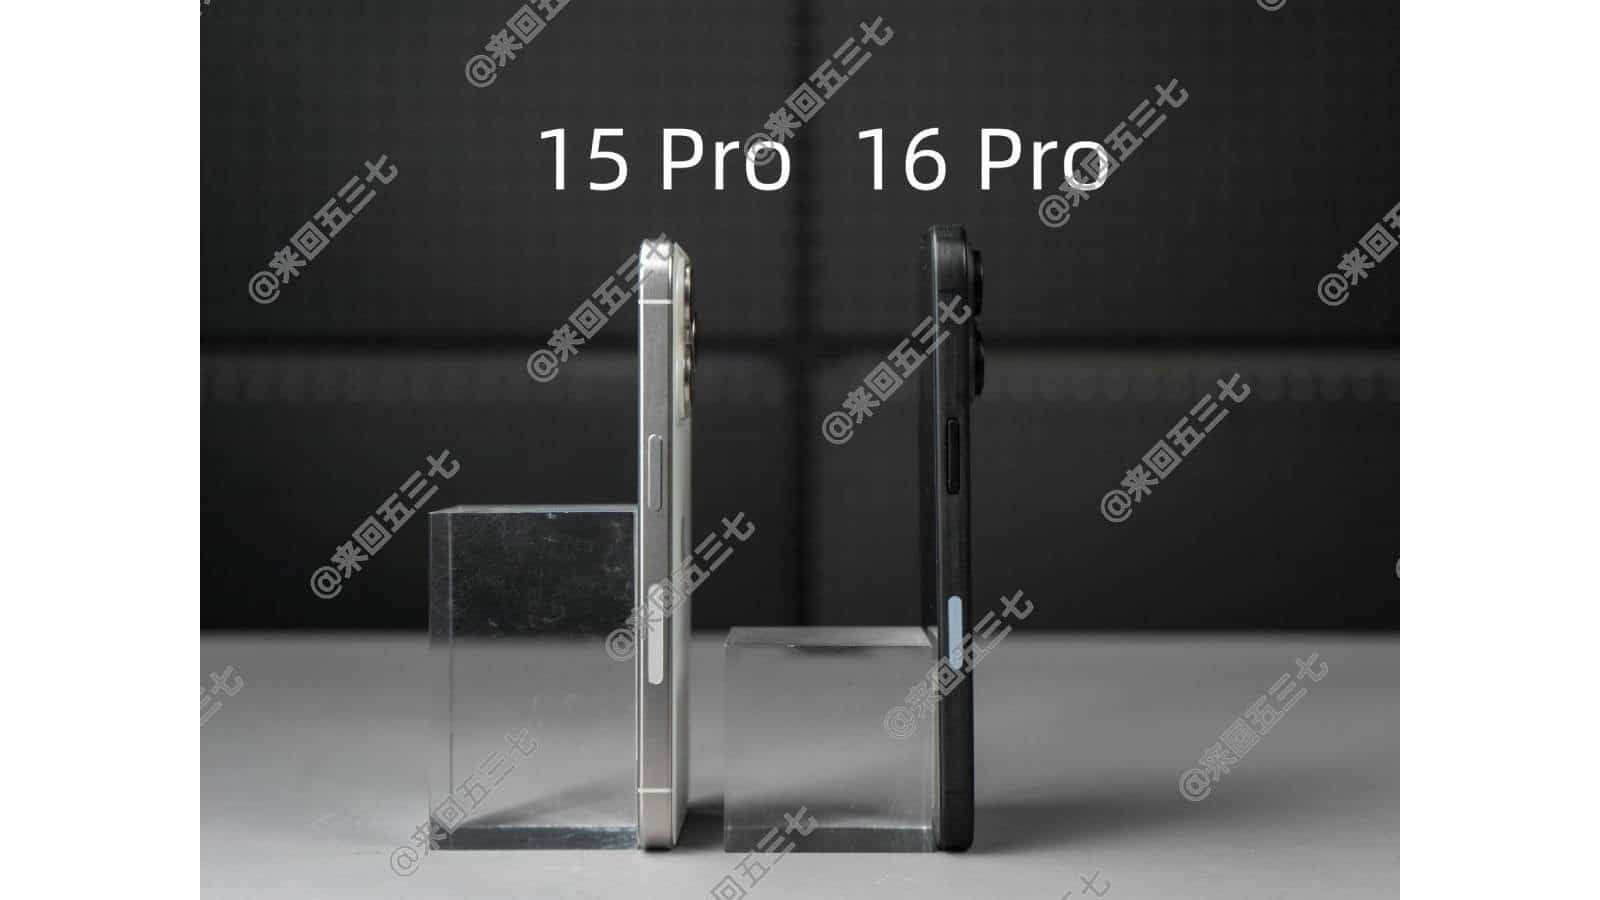 iPhone 16 Pro, iPhone 16 Pro VS iPhone 15 Pro: Μπορείς να ξεχωρίσεις ποιο είναι ποιο στις φωτογραφίες;